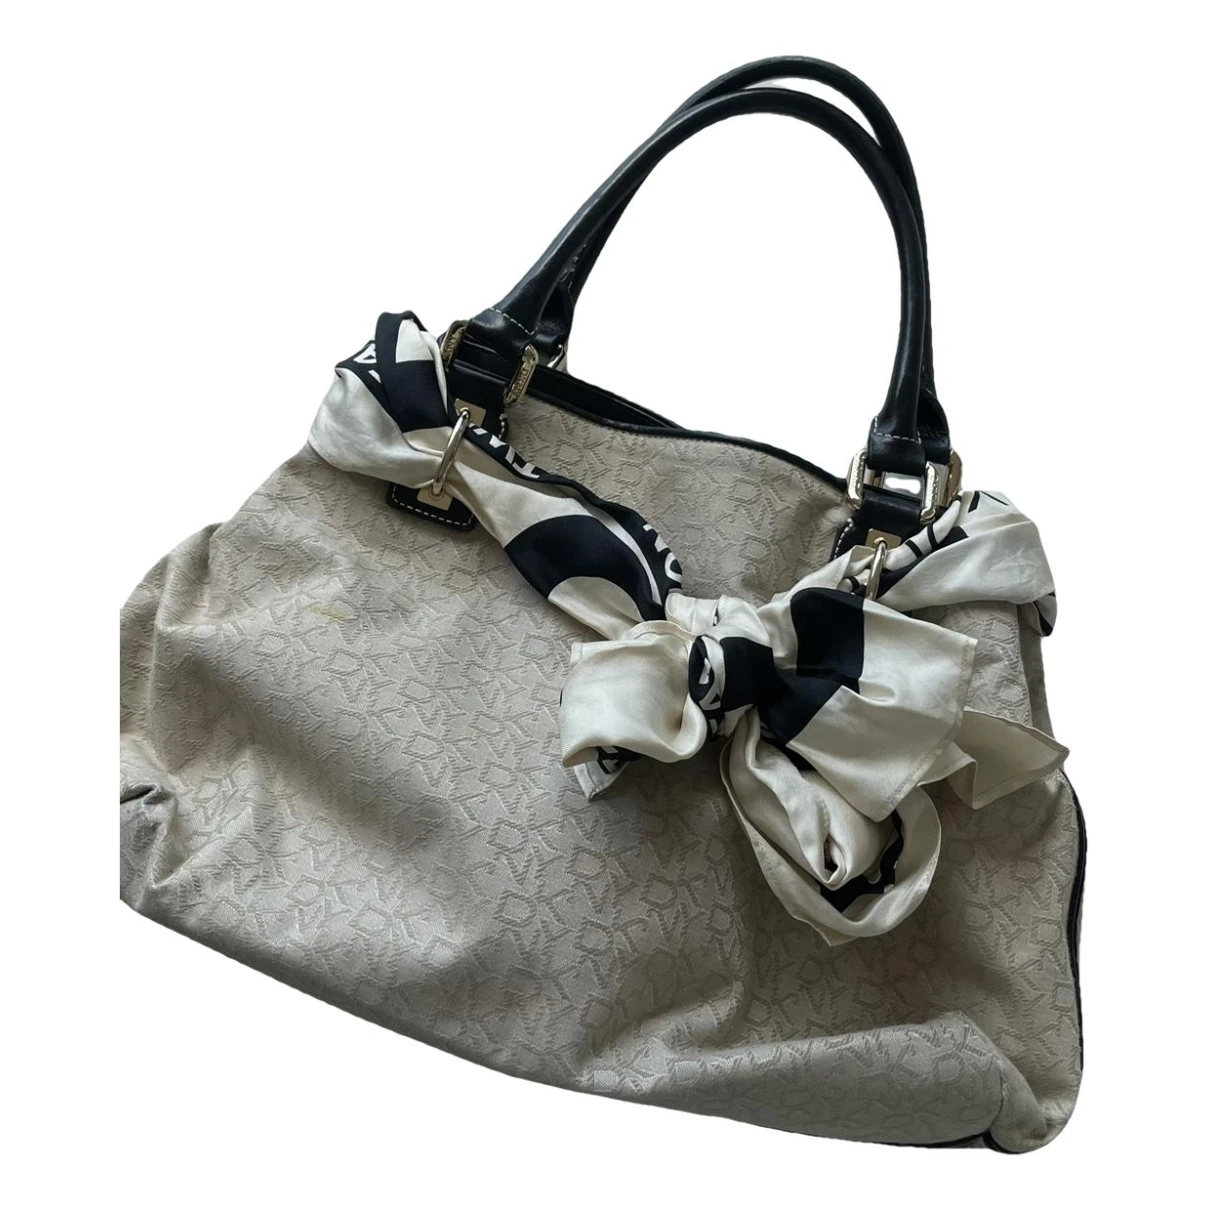 Pre-owned Dkny Cloth Handbag In Beige